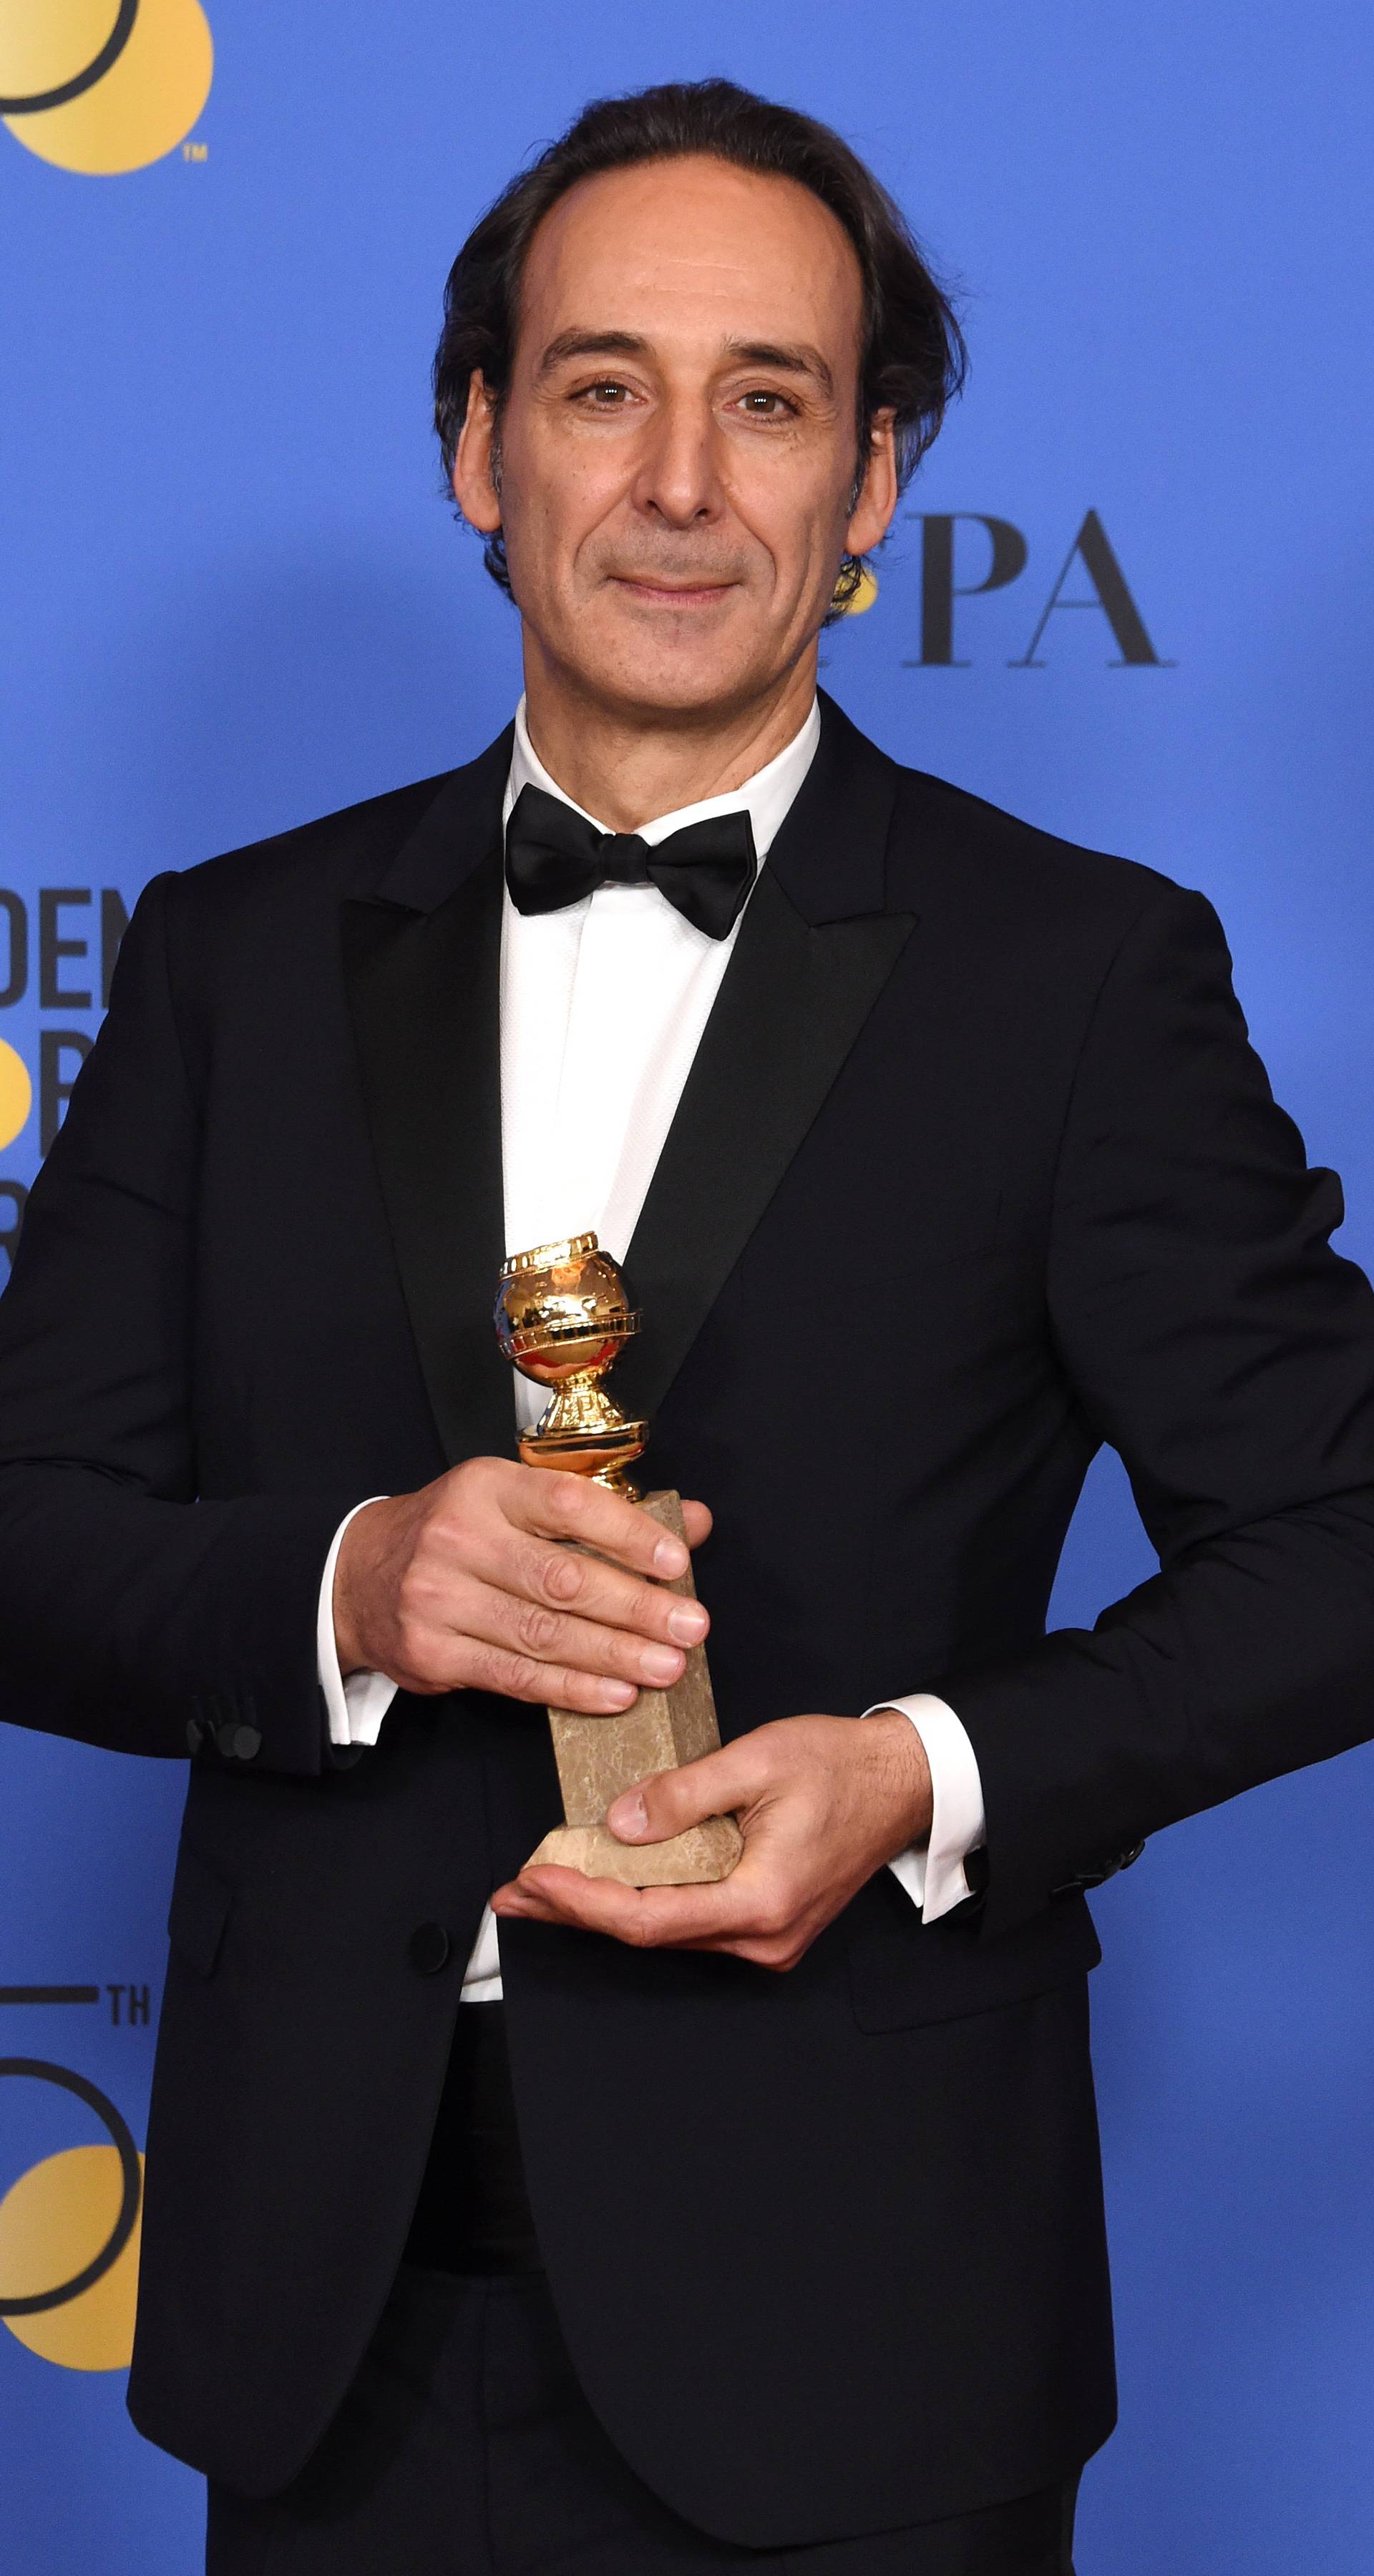 The 75th Golden Globe Awards - Press Room - Los Angeles